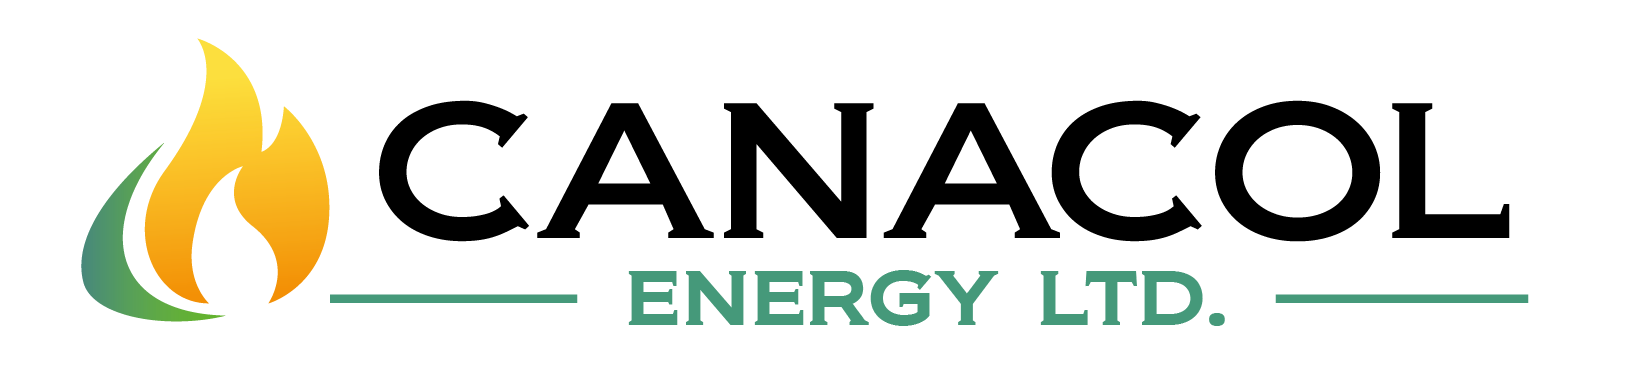 Logo de Canacol Energy LTD - Clientes Analytics Plus - Honduras